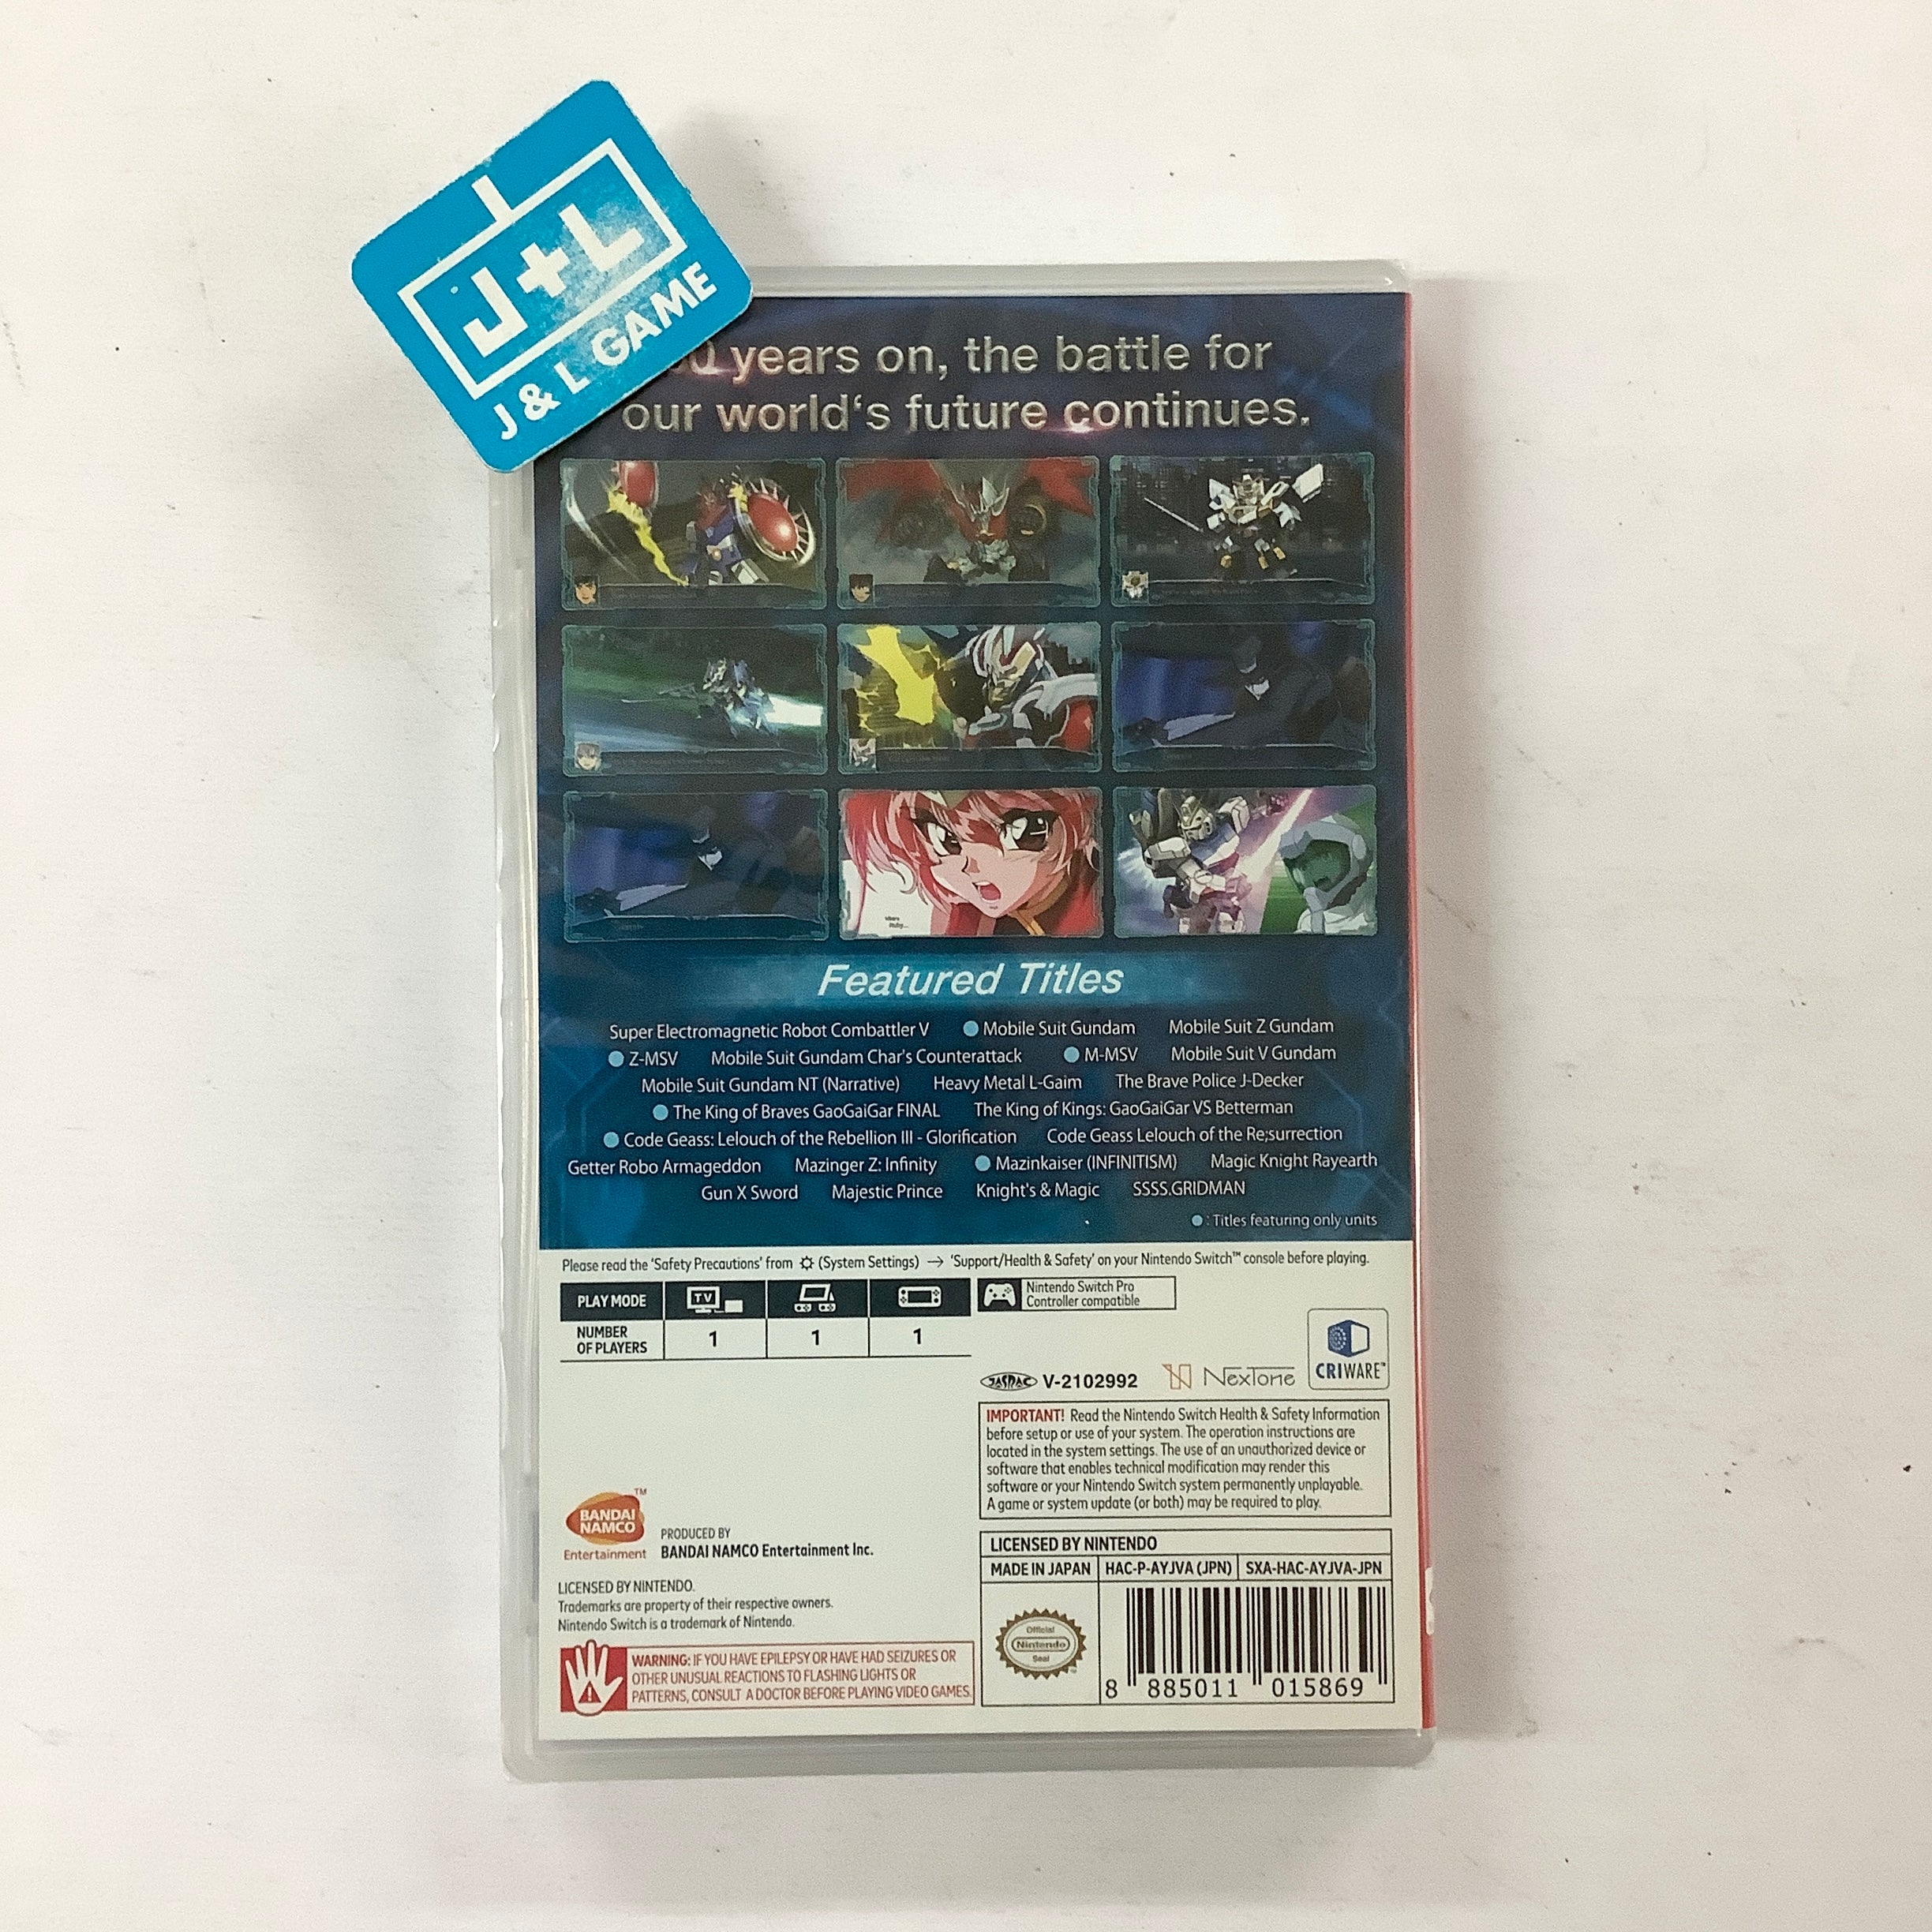 Super Robot Wars 30 - (NSW) Nintendo Switch (Asia Import) Video Games Bandai Namco Games   